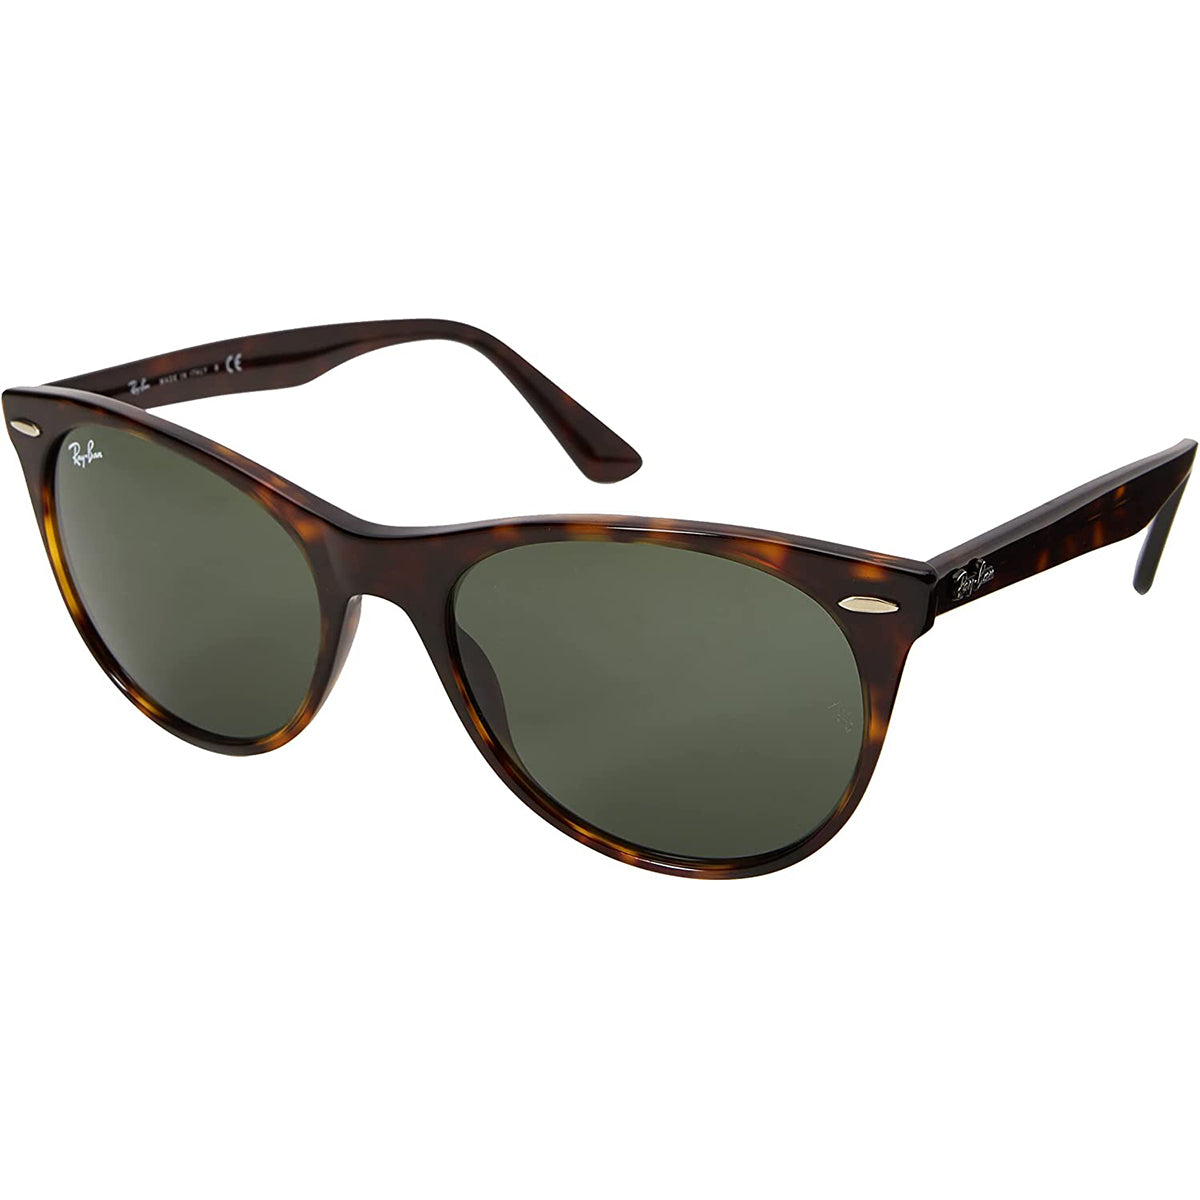 Ray-Ban Wayfarer II Classic Adult Lifestyle Sunglasses-0RB2185